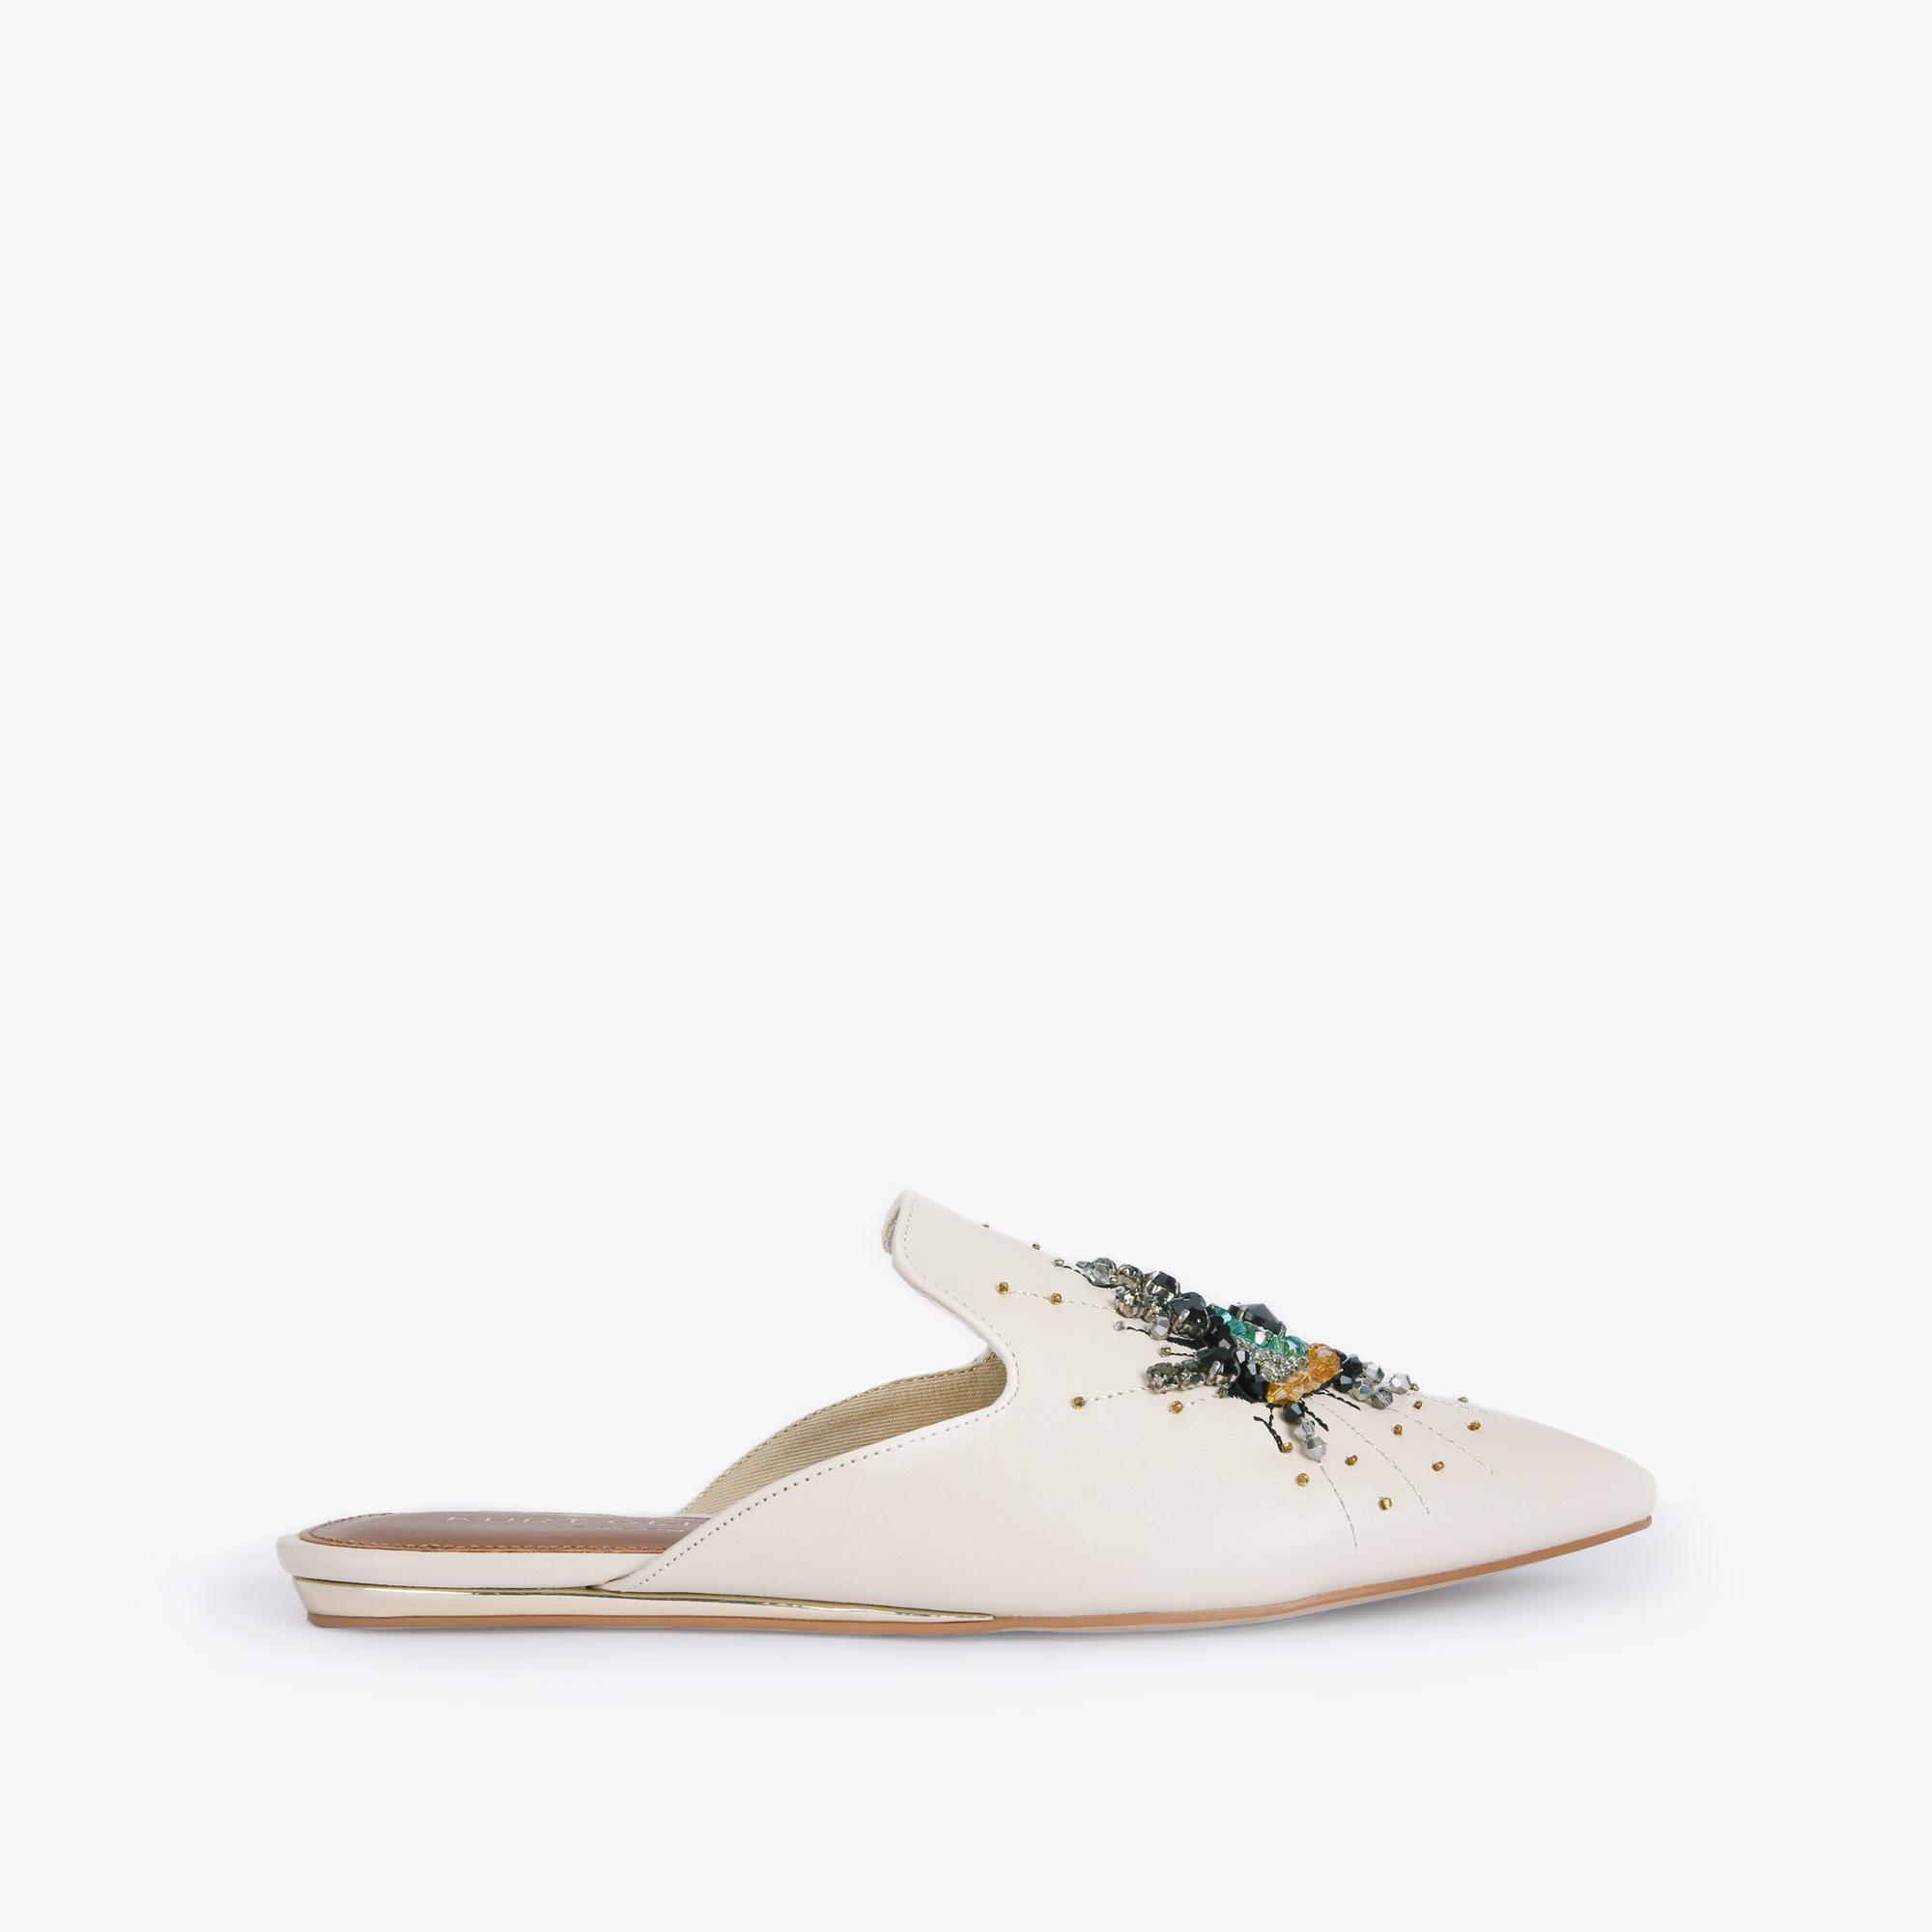 Carvela Kurt Geiger Rubber Flip Flops in White Womens Shoes Flats and flat shoes Sandals and flip-flops 